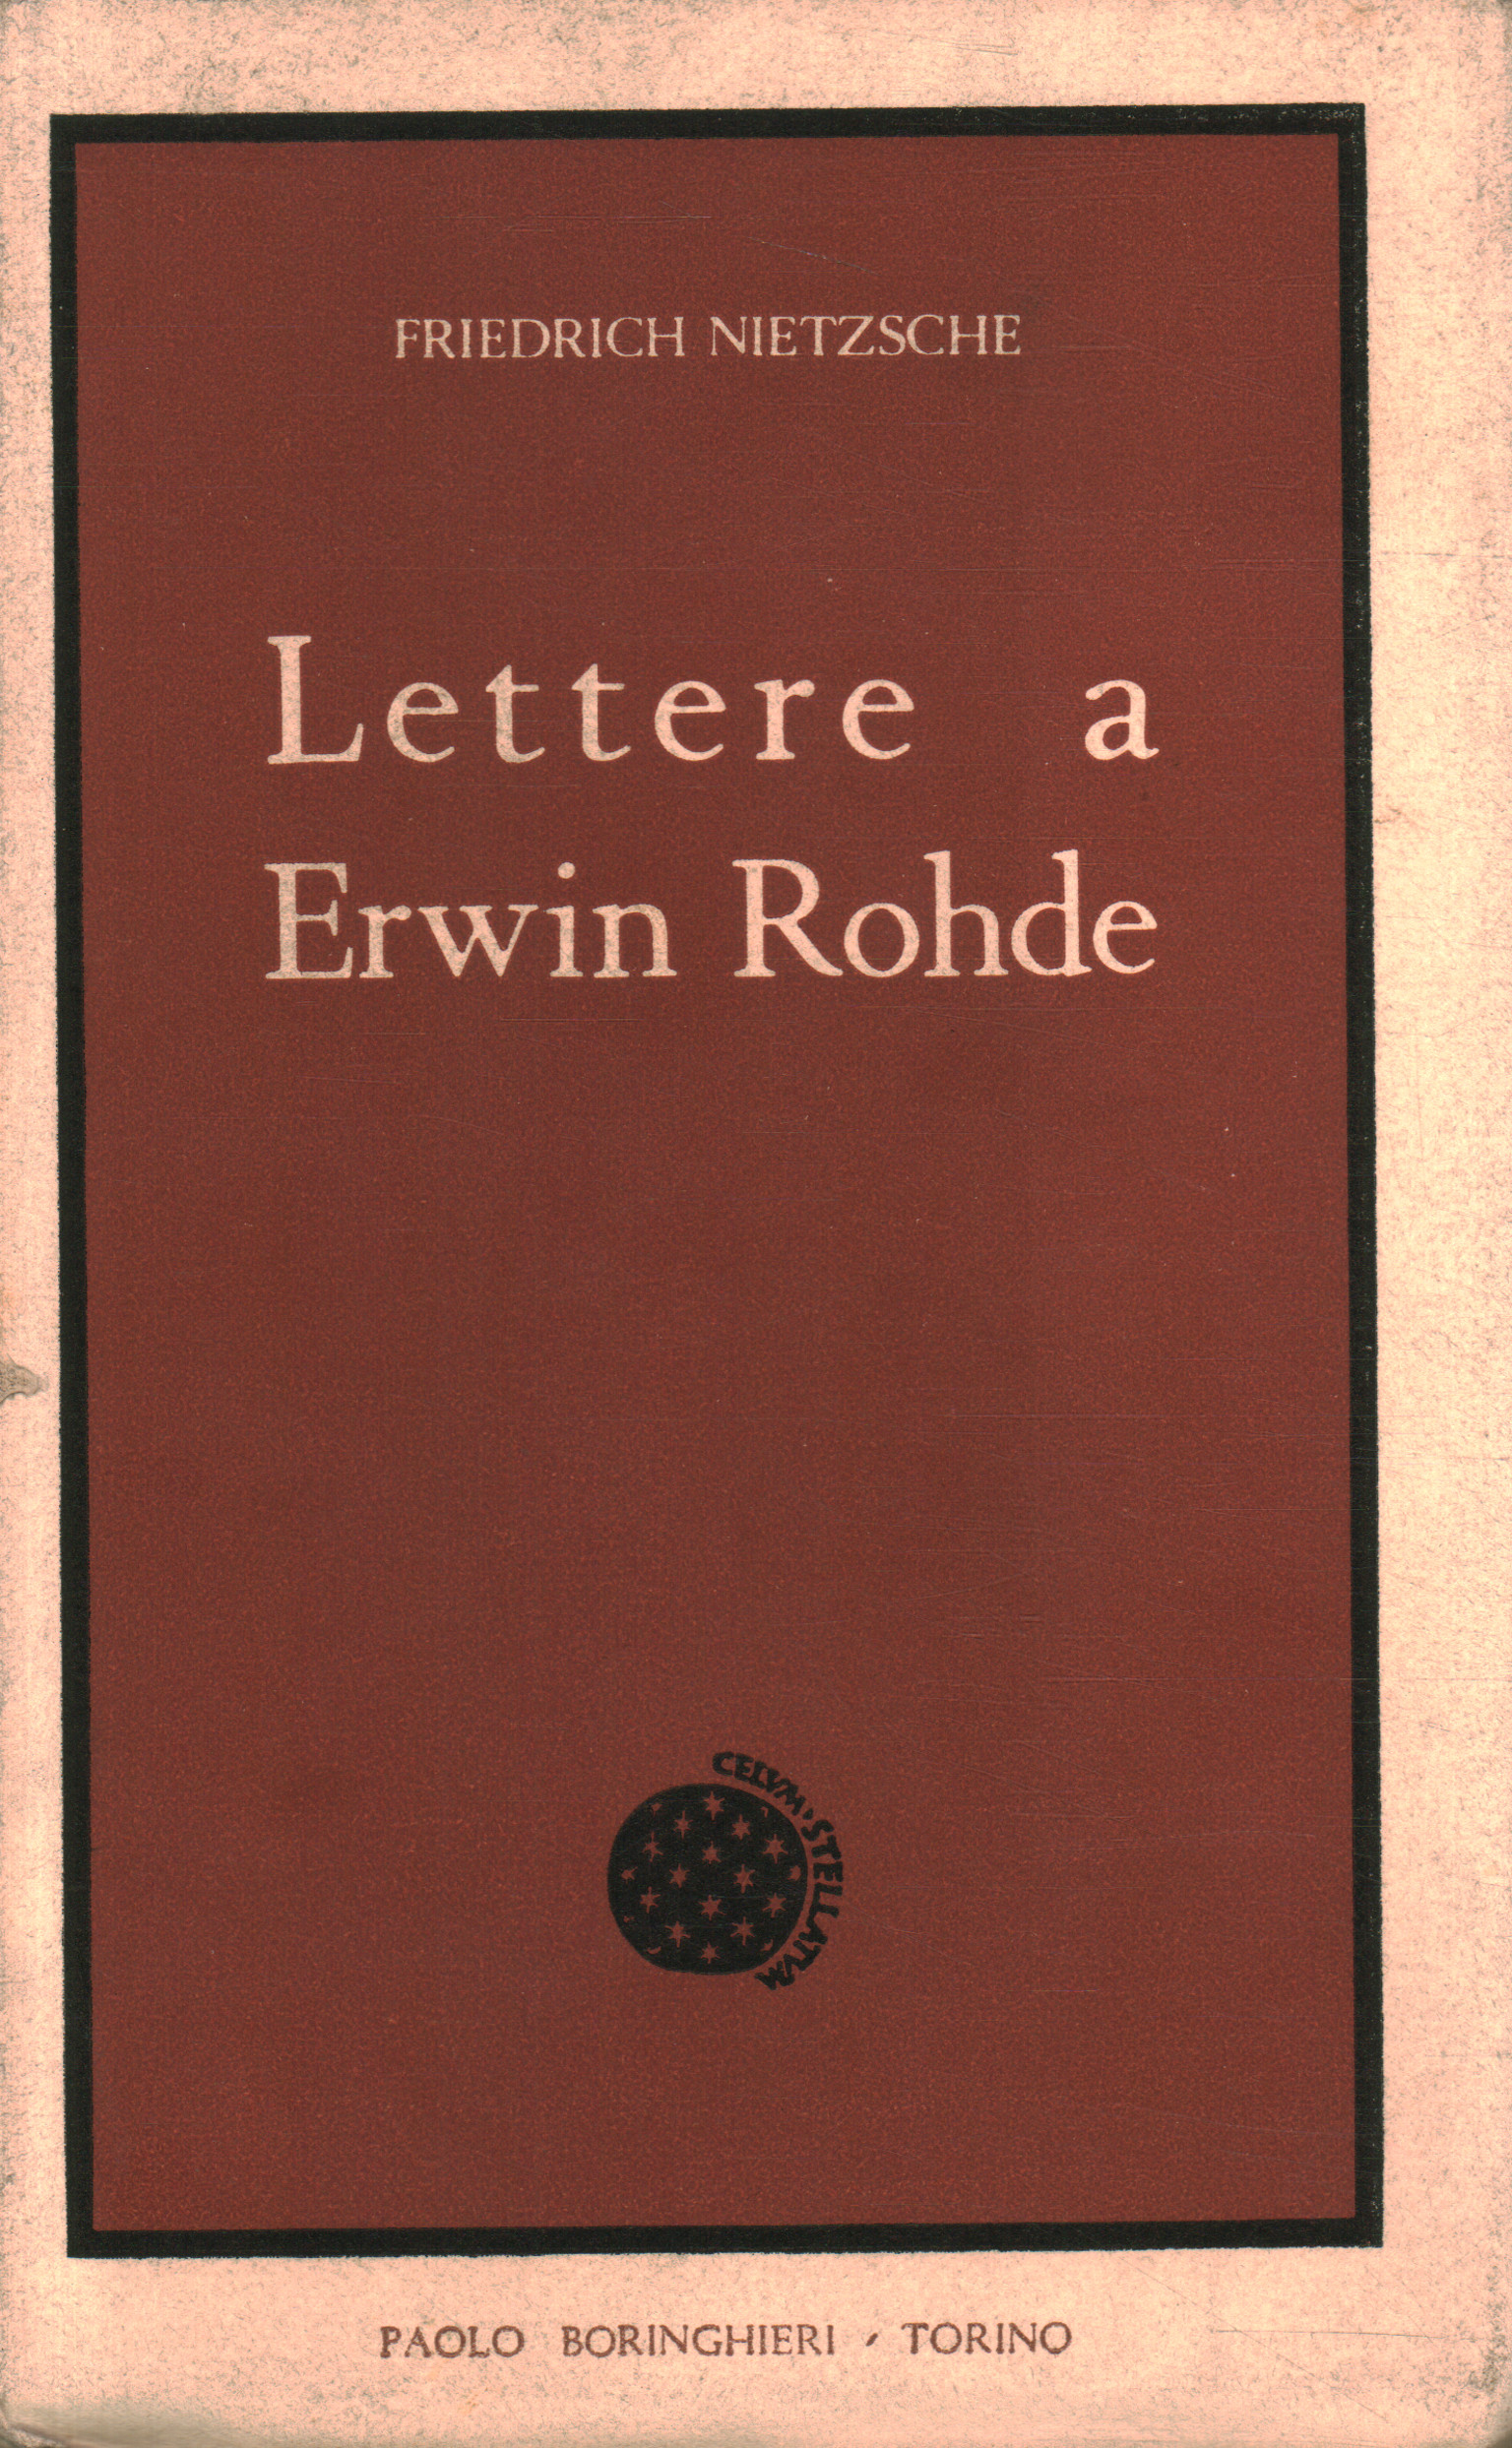 Libri - Storia - Biografie Diari/Memorie,Lettere a Erwin Rohde